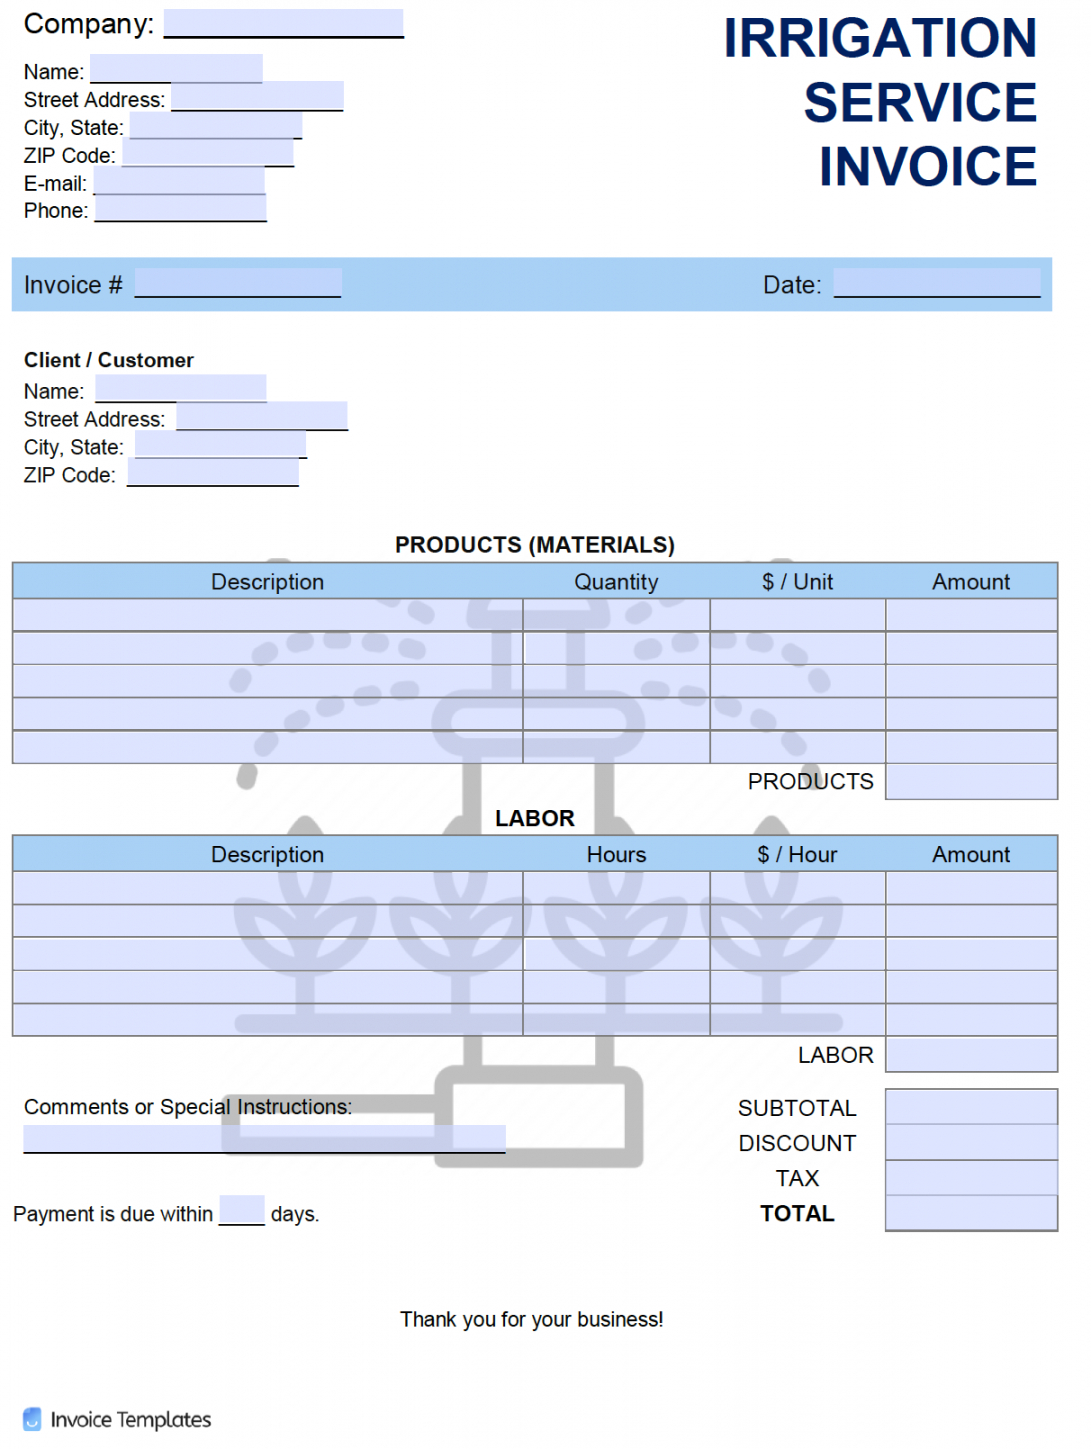 free irrigation service invoice template  pdf  word  excel irrigation estimate template word